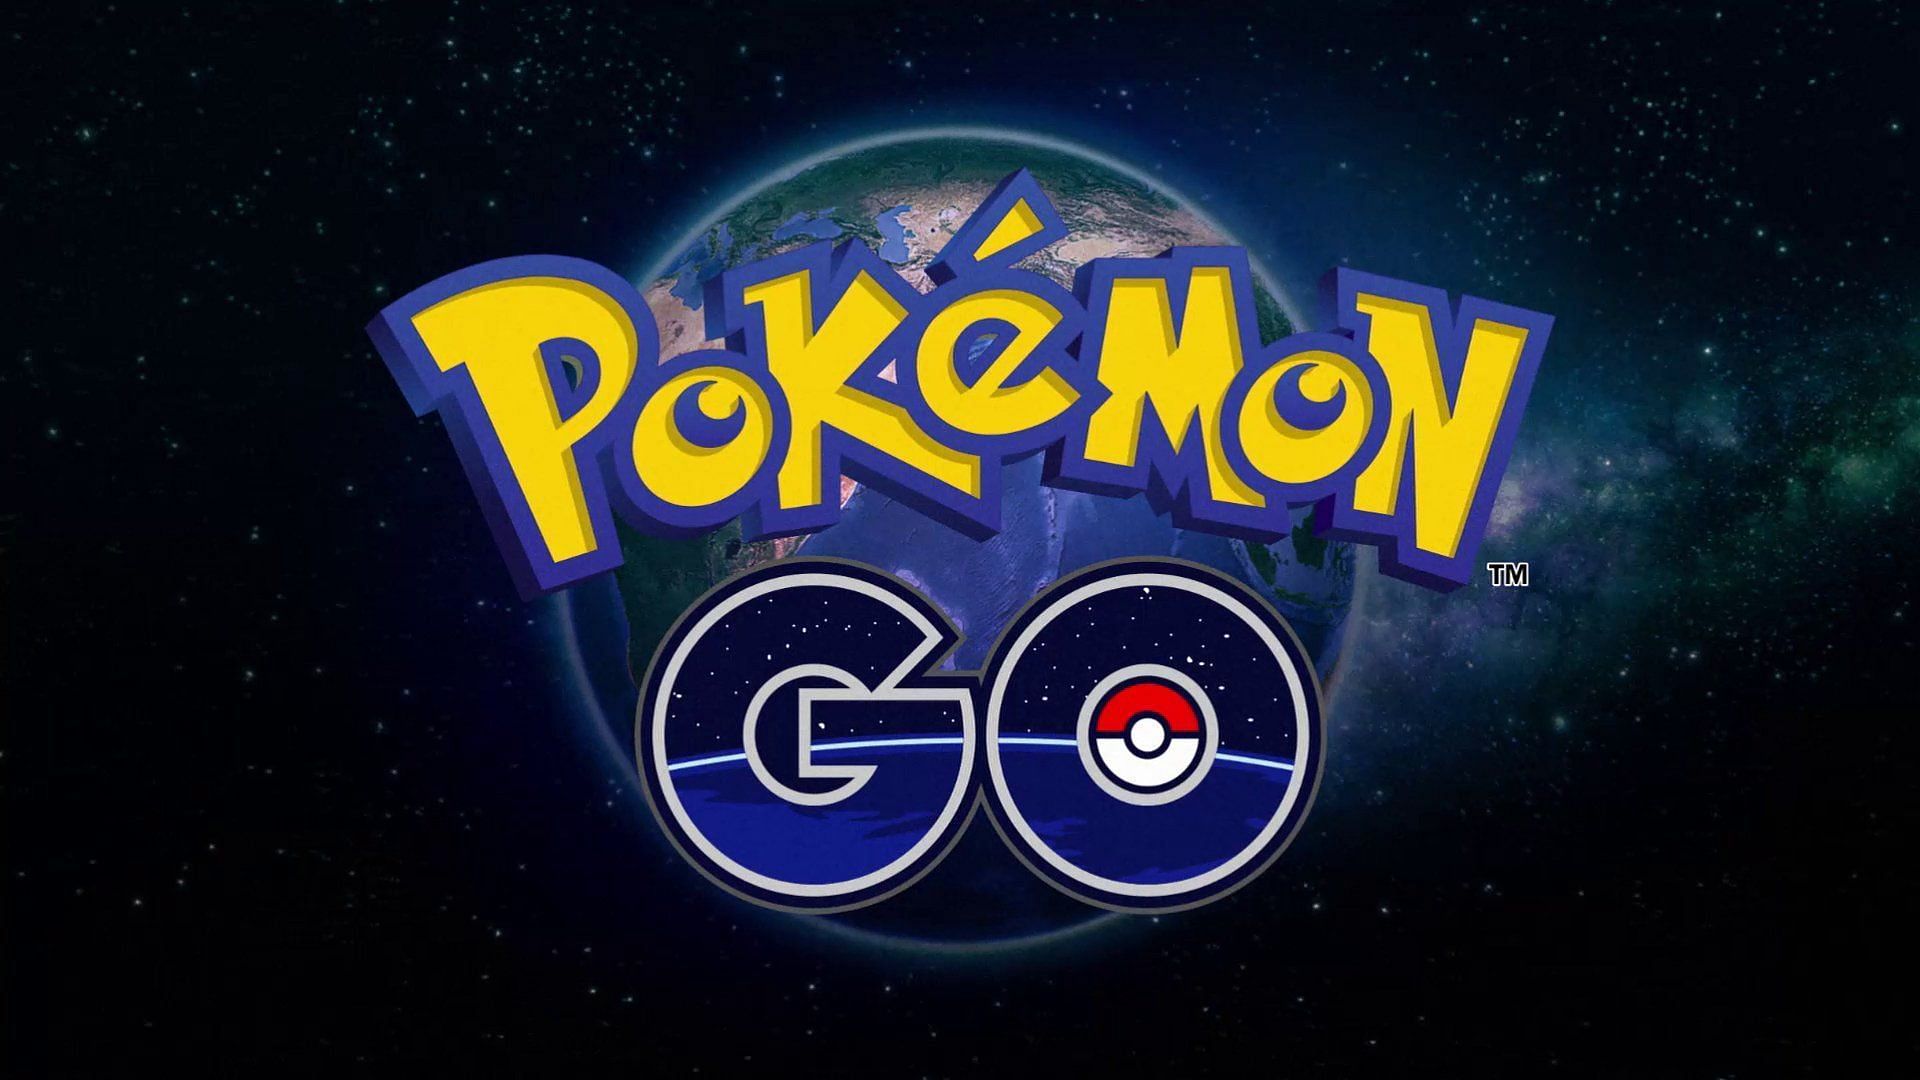 The official logo for Pokemon GO (Image via Niantic)